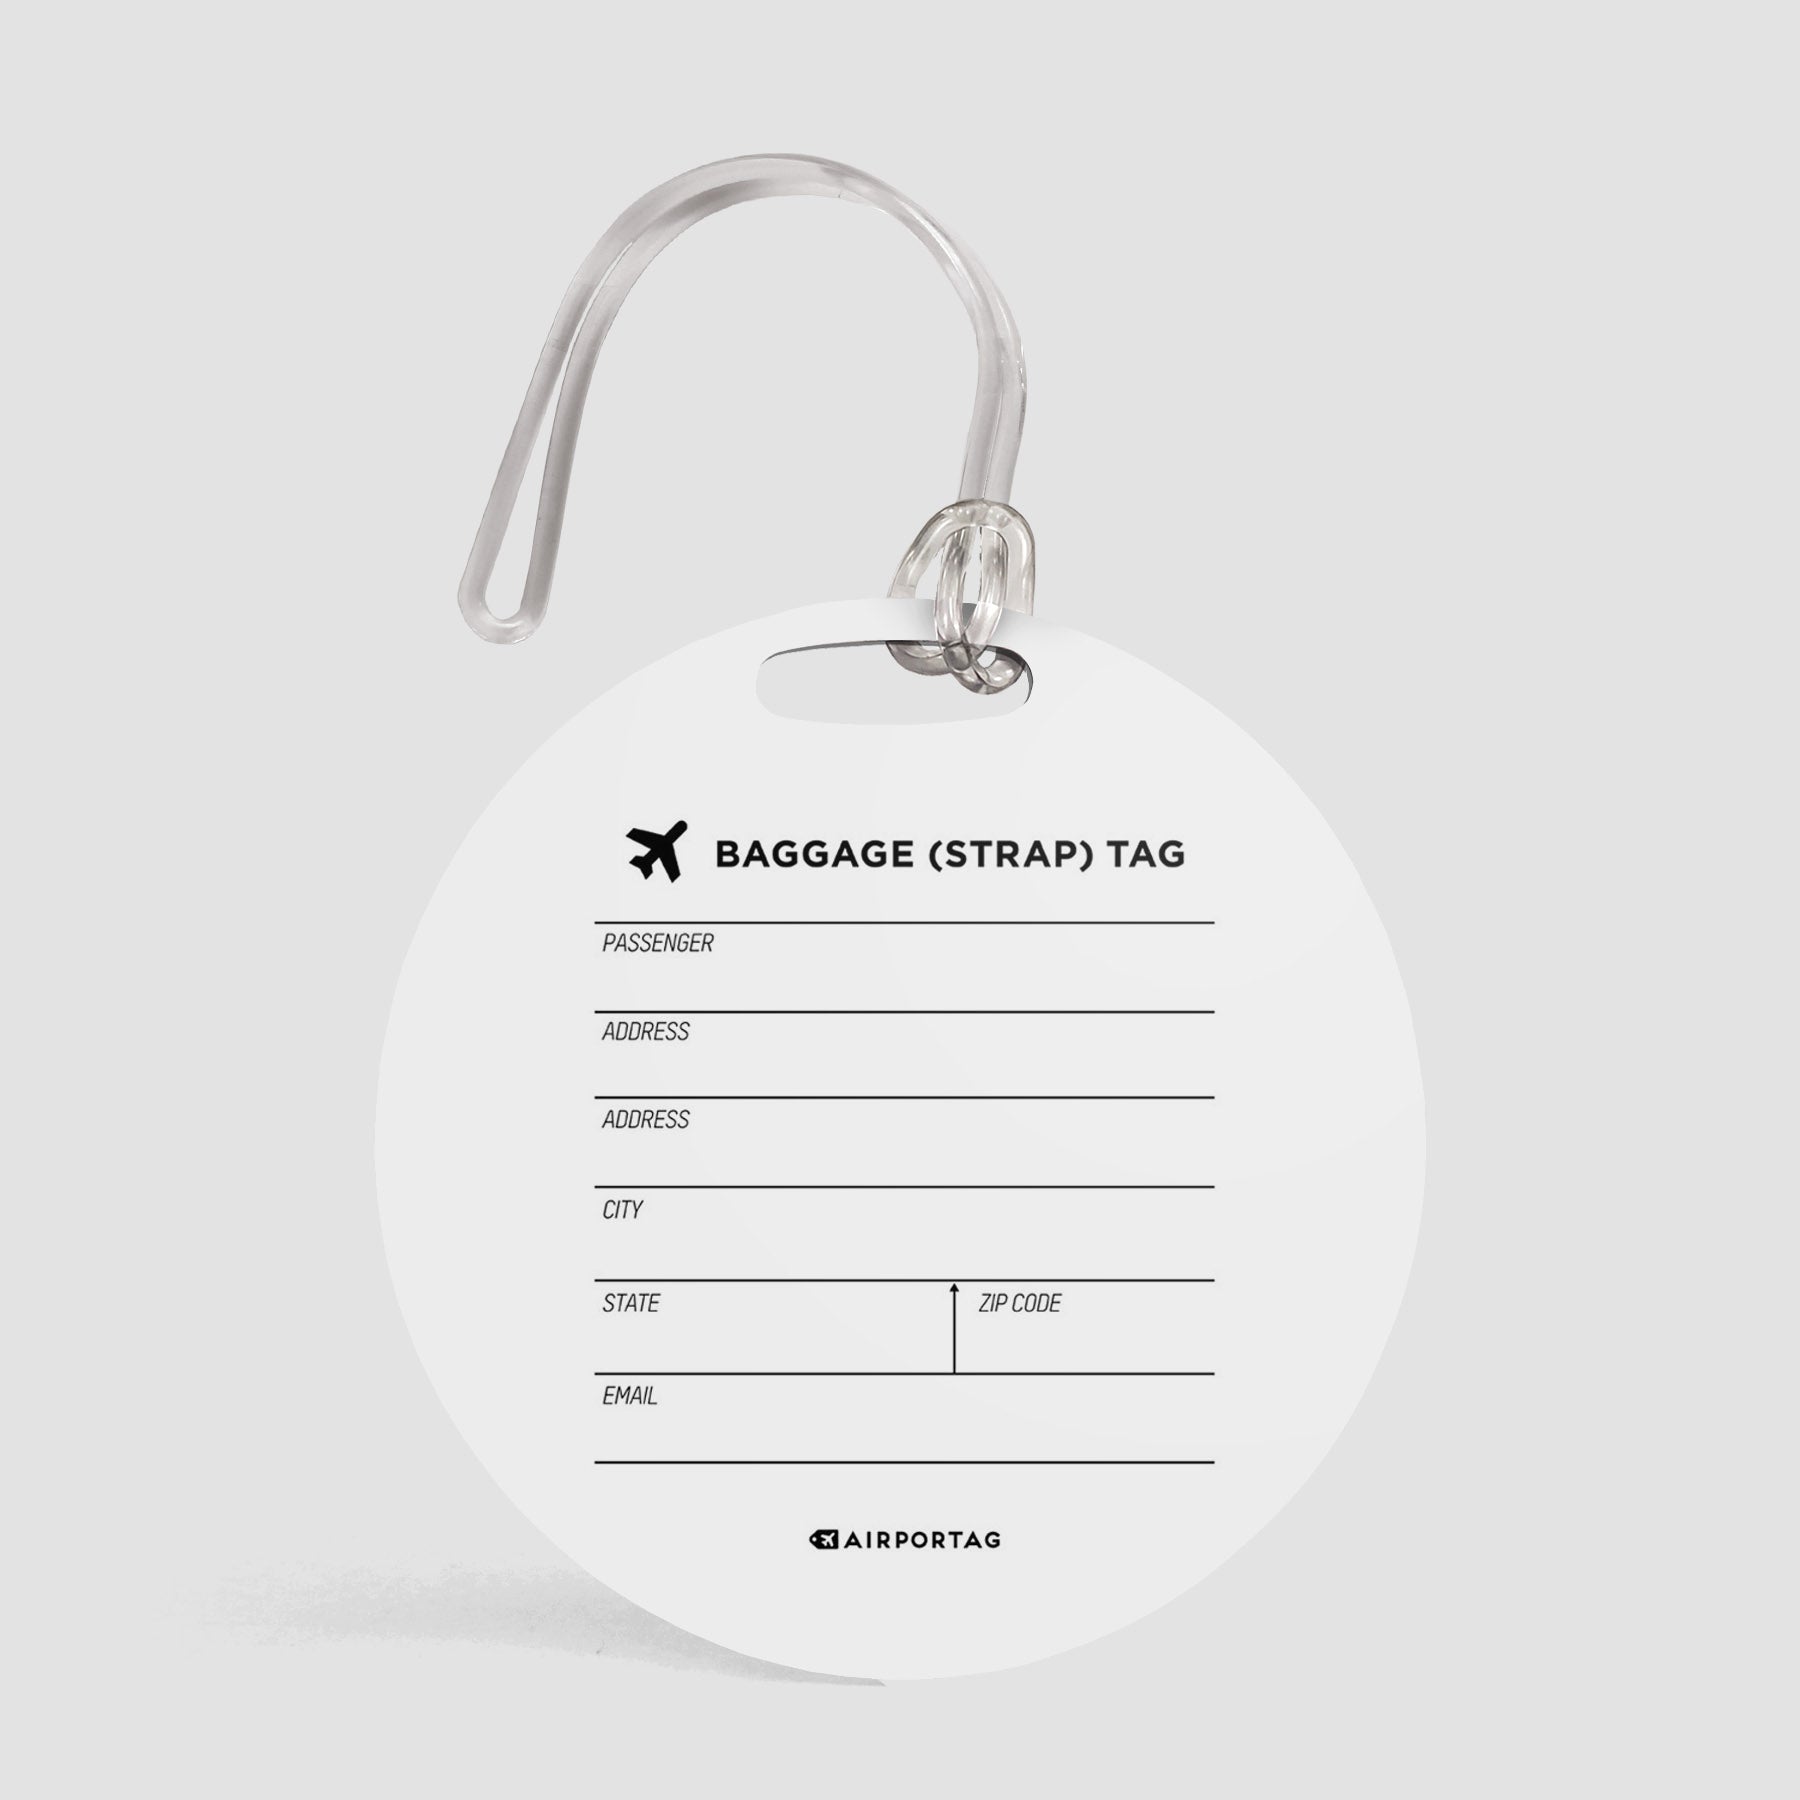 Travel is - Flight Board - Luggage Tag